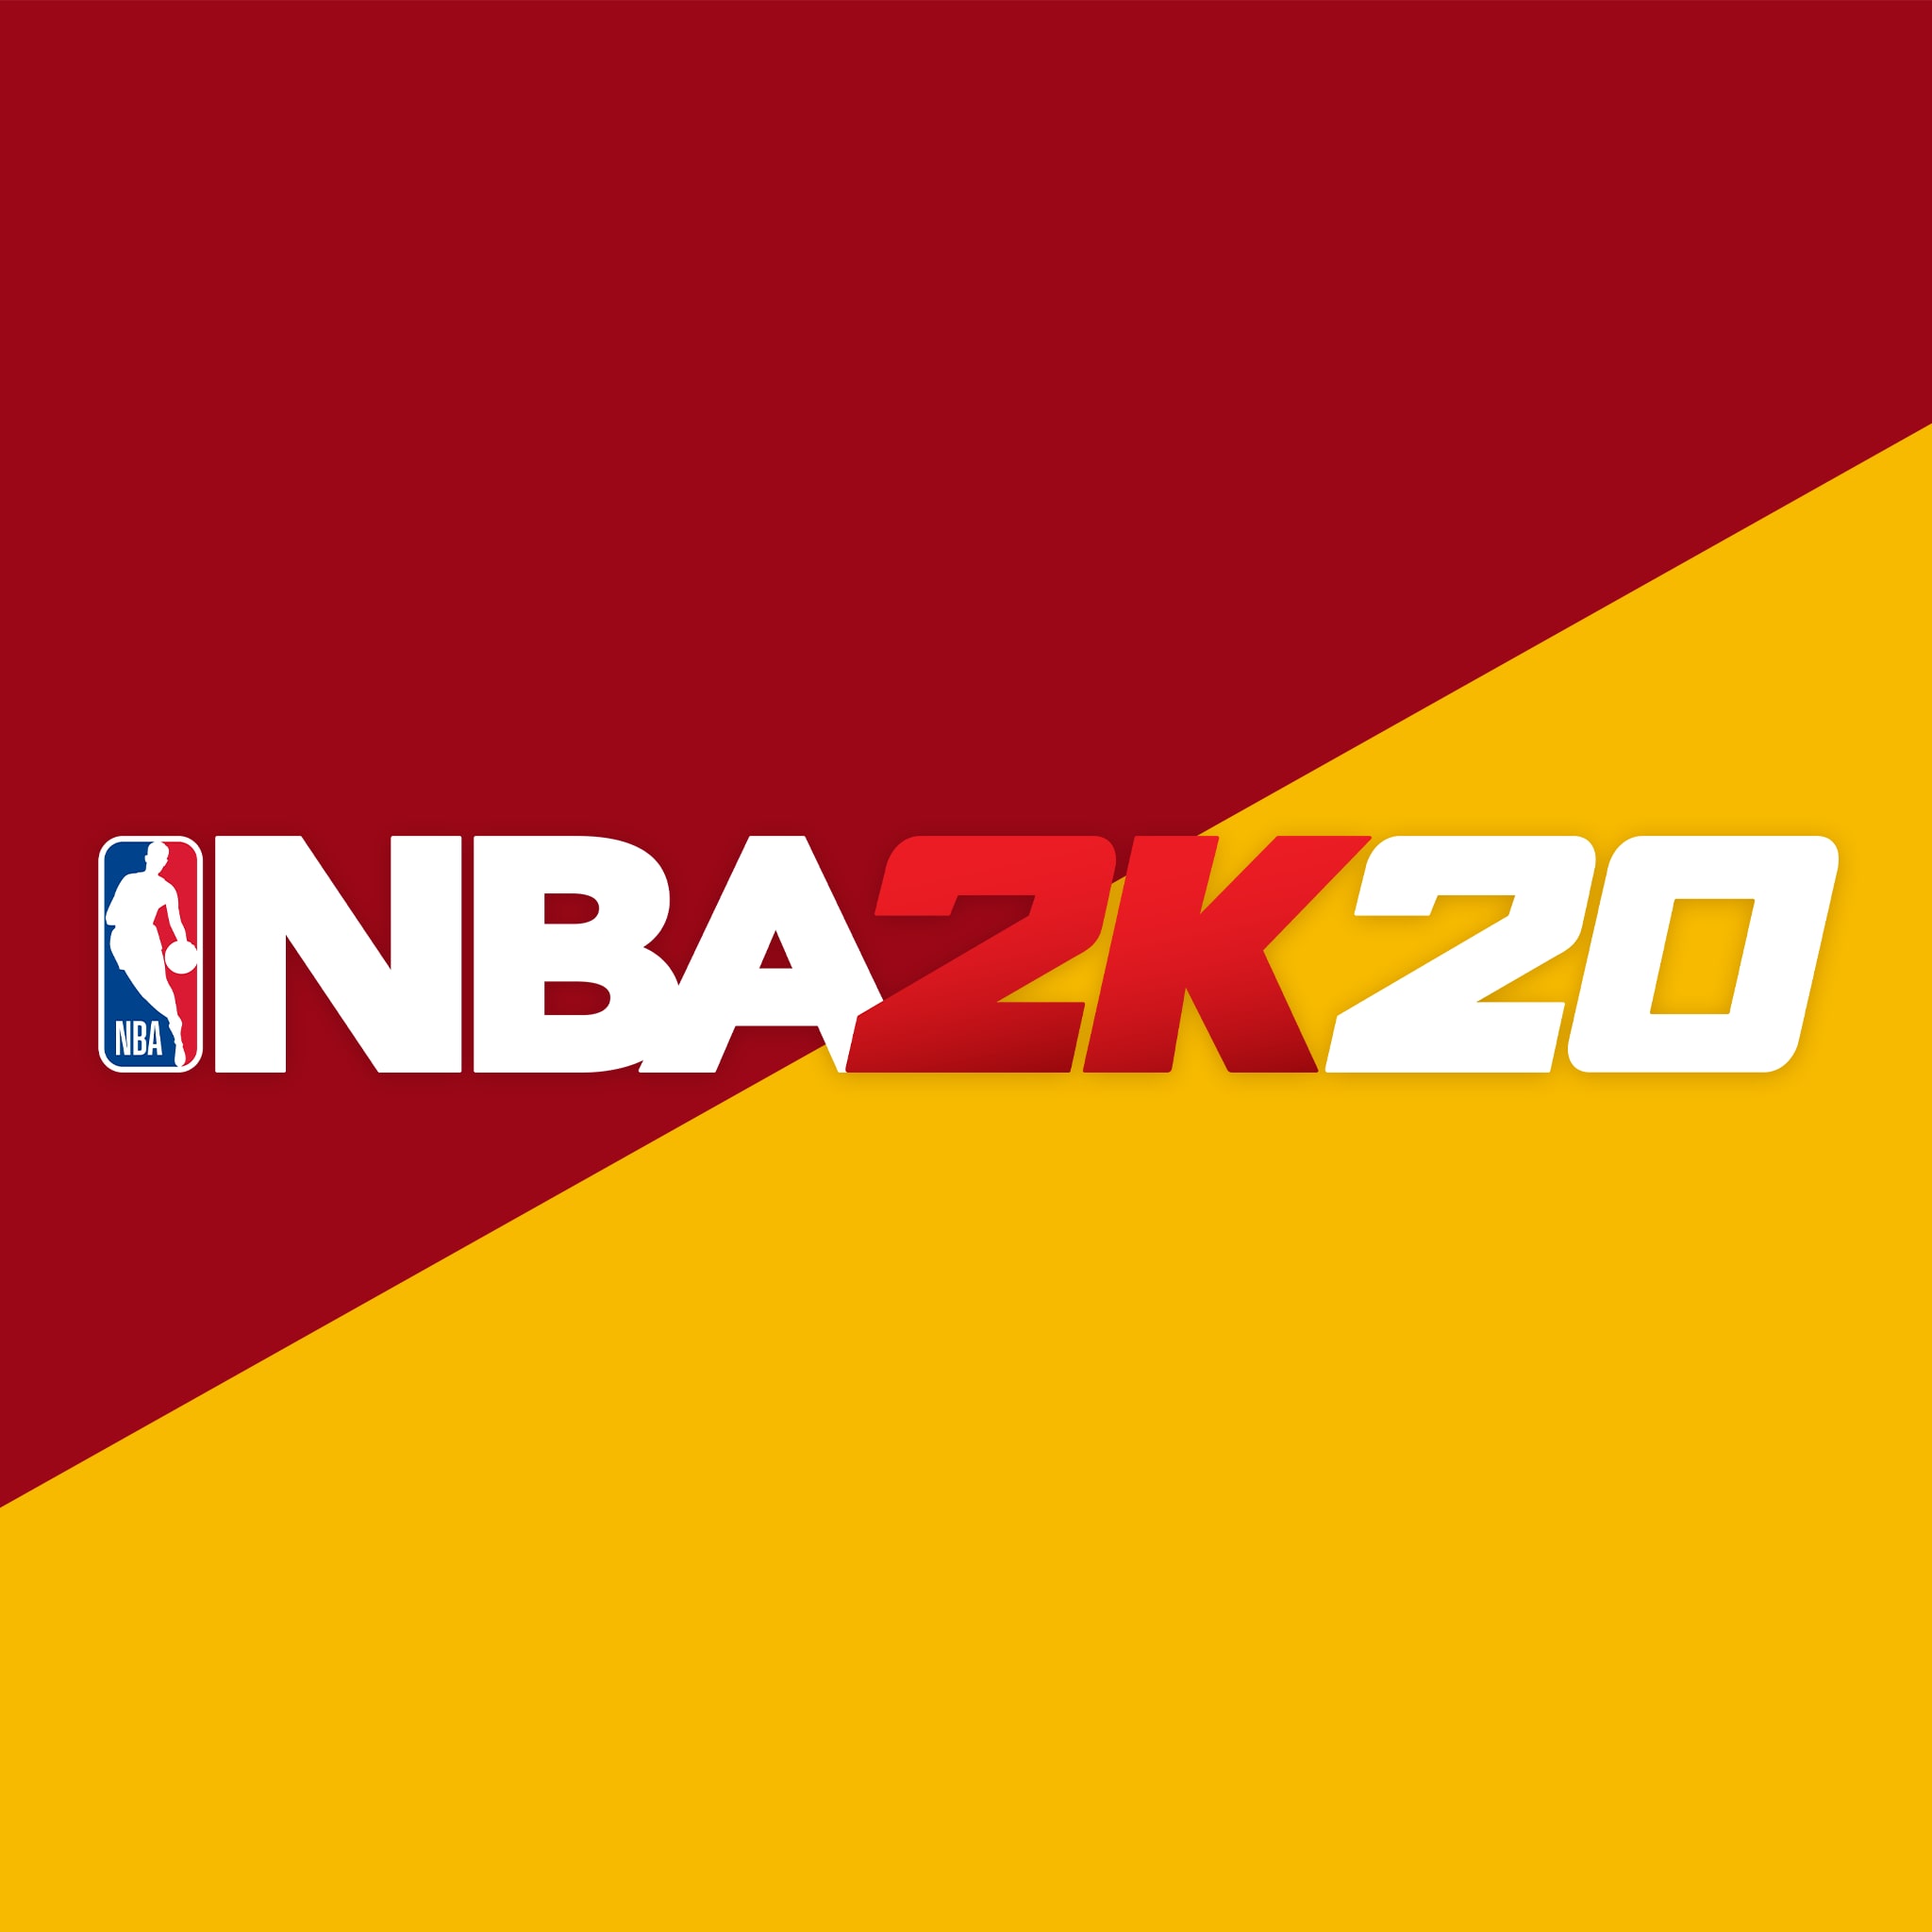 NBA 2K20 Commentary